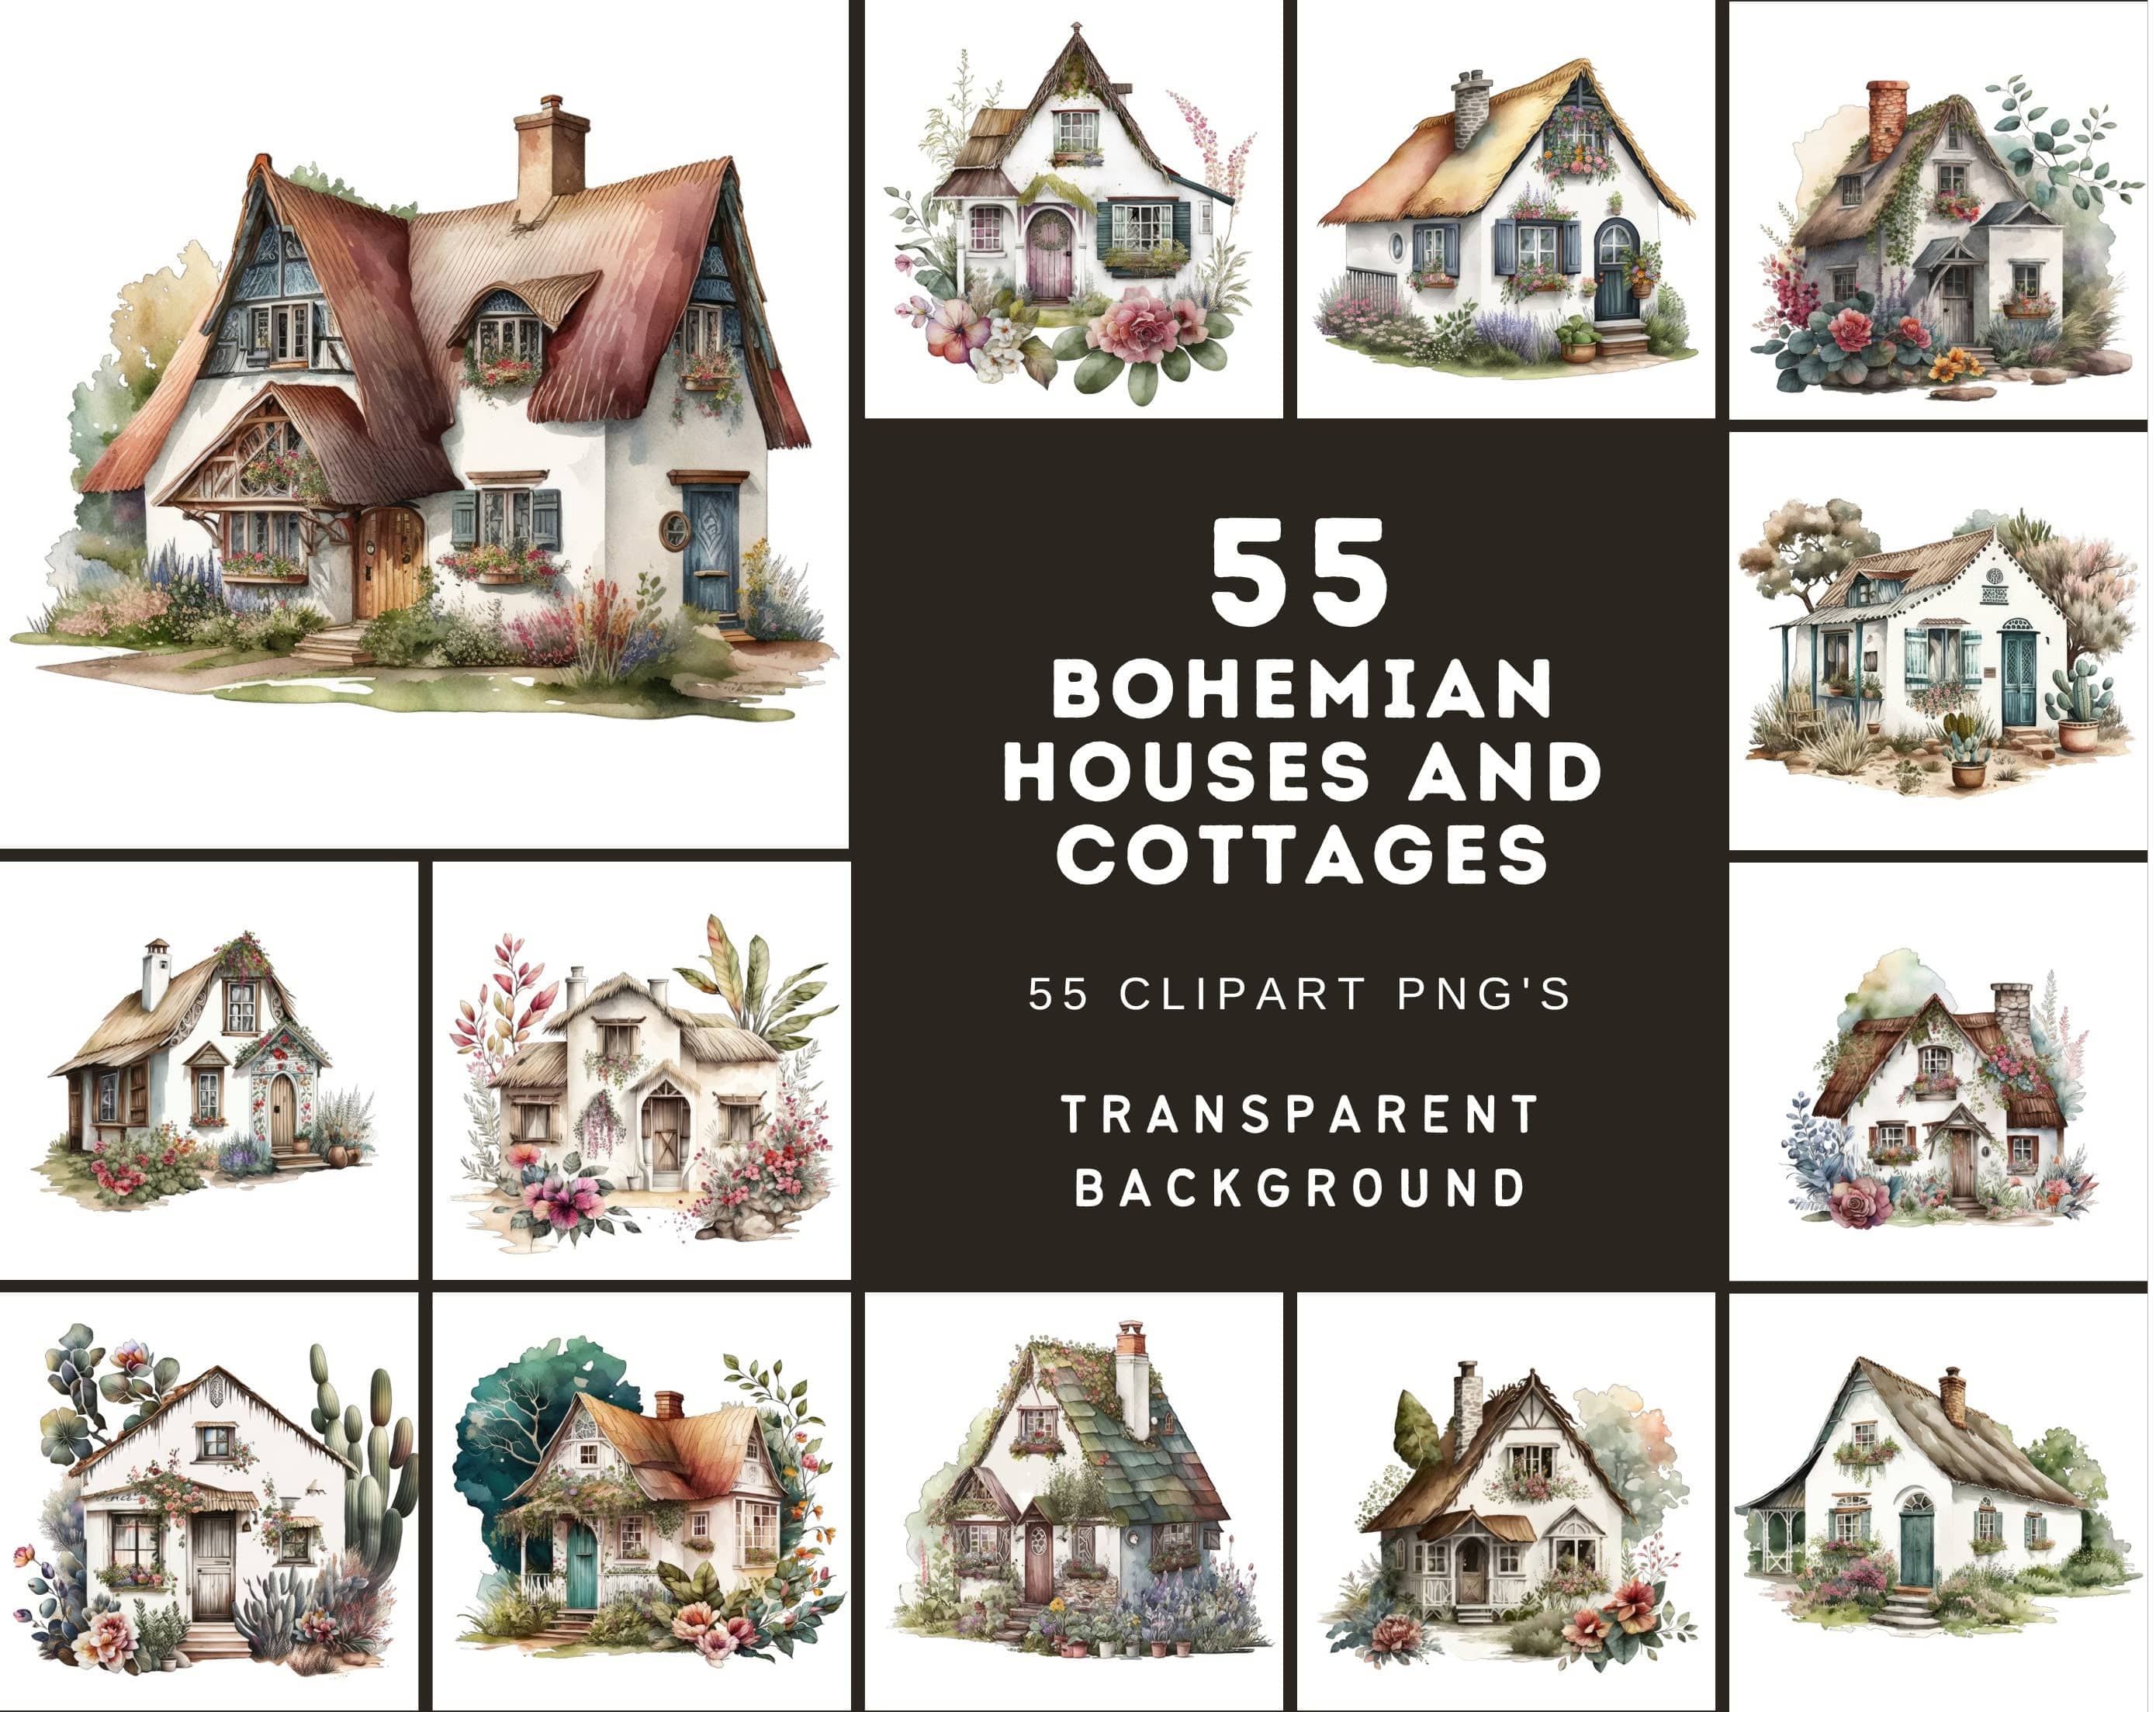 Enchanting Bohemian House & Cottage Image Bundle - 55 Unique, Boho Chic Home Transparent Illustrations for Digital and Print Projects Digital Download Sumobundle